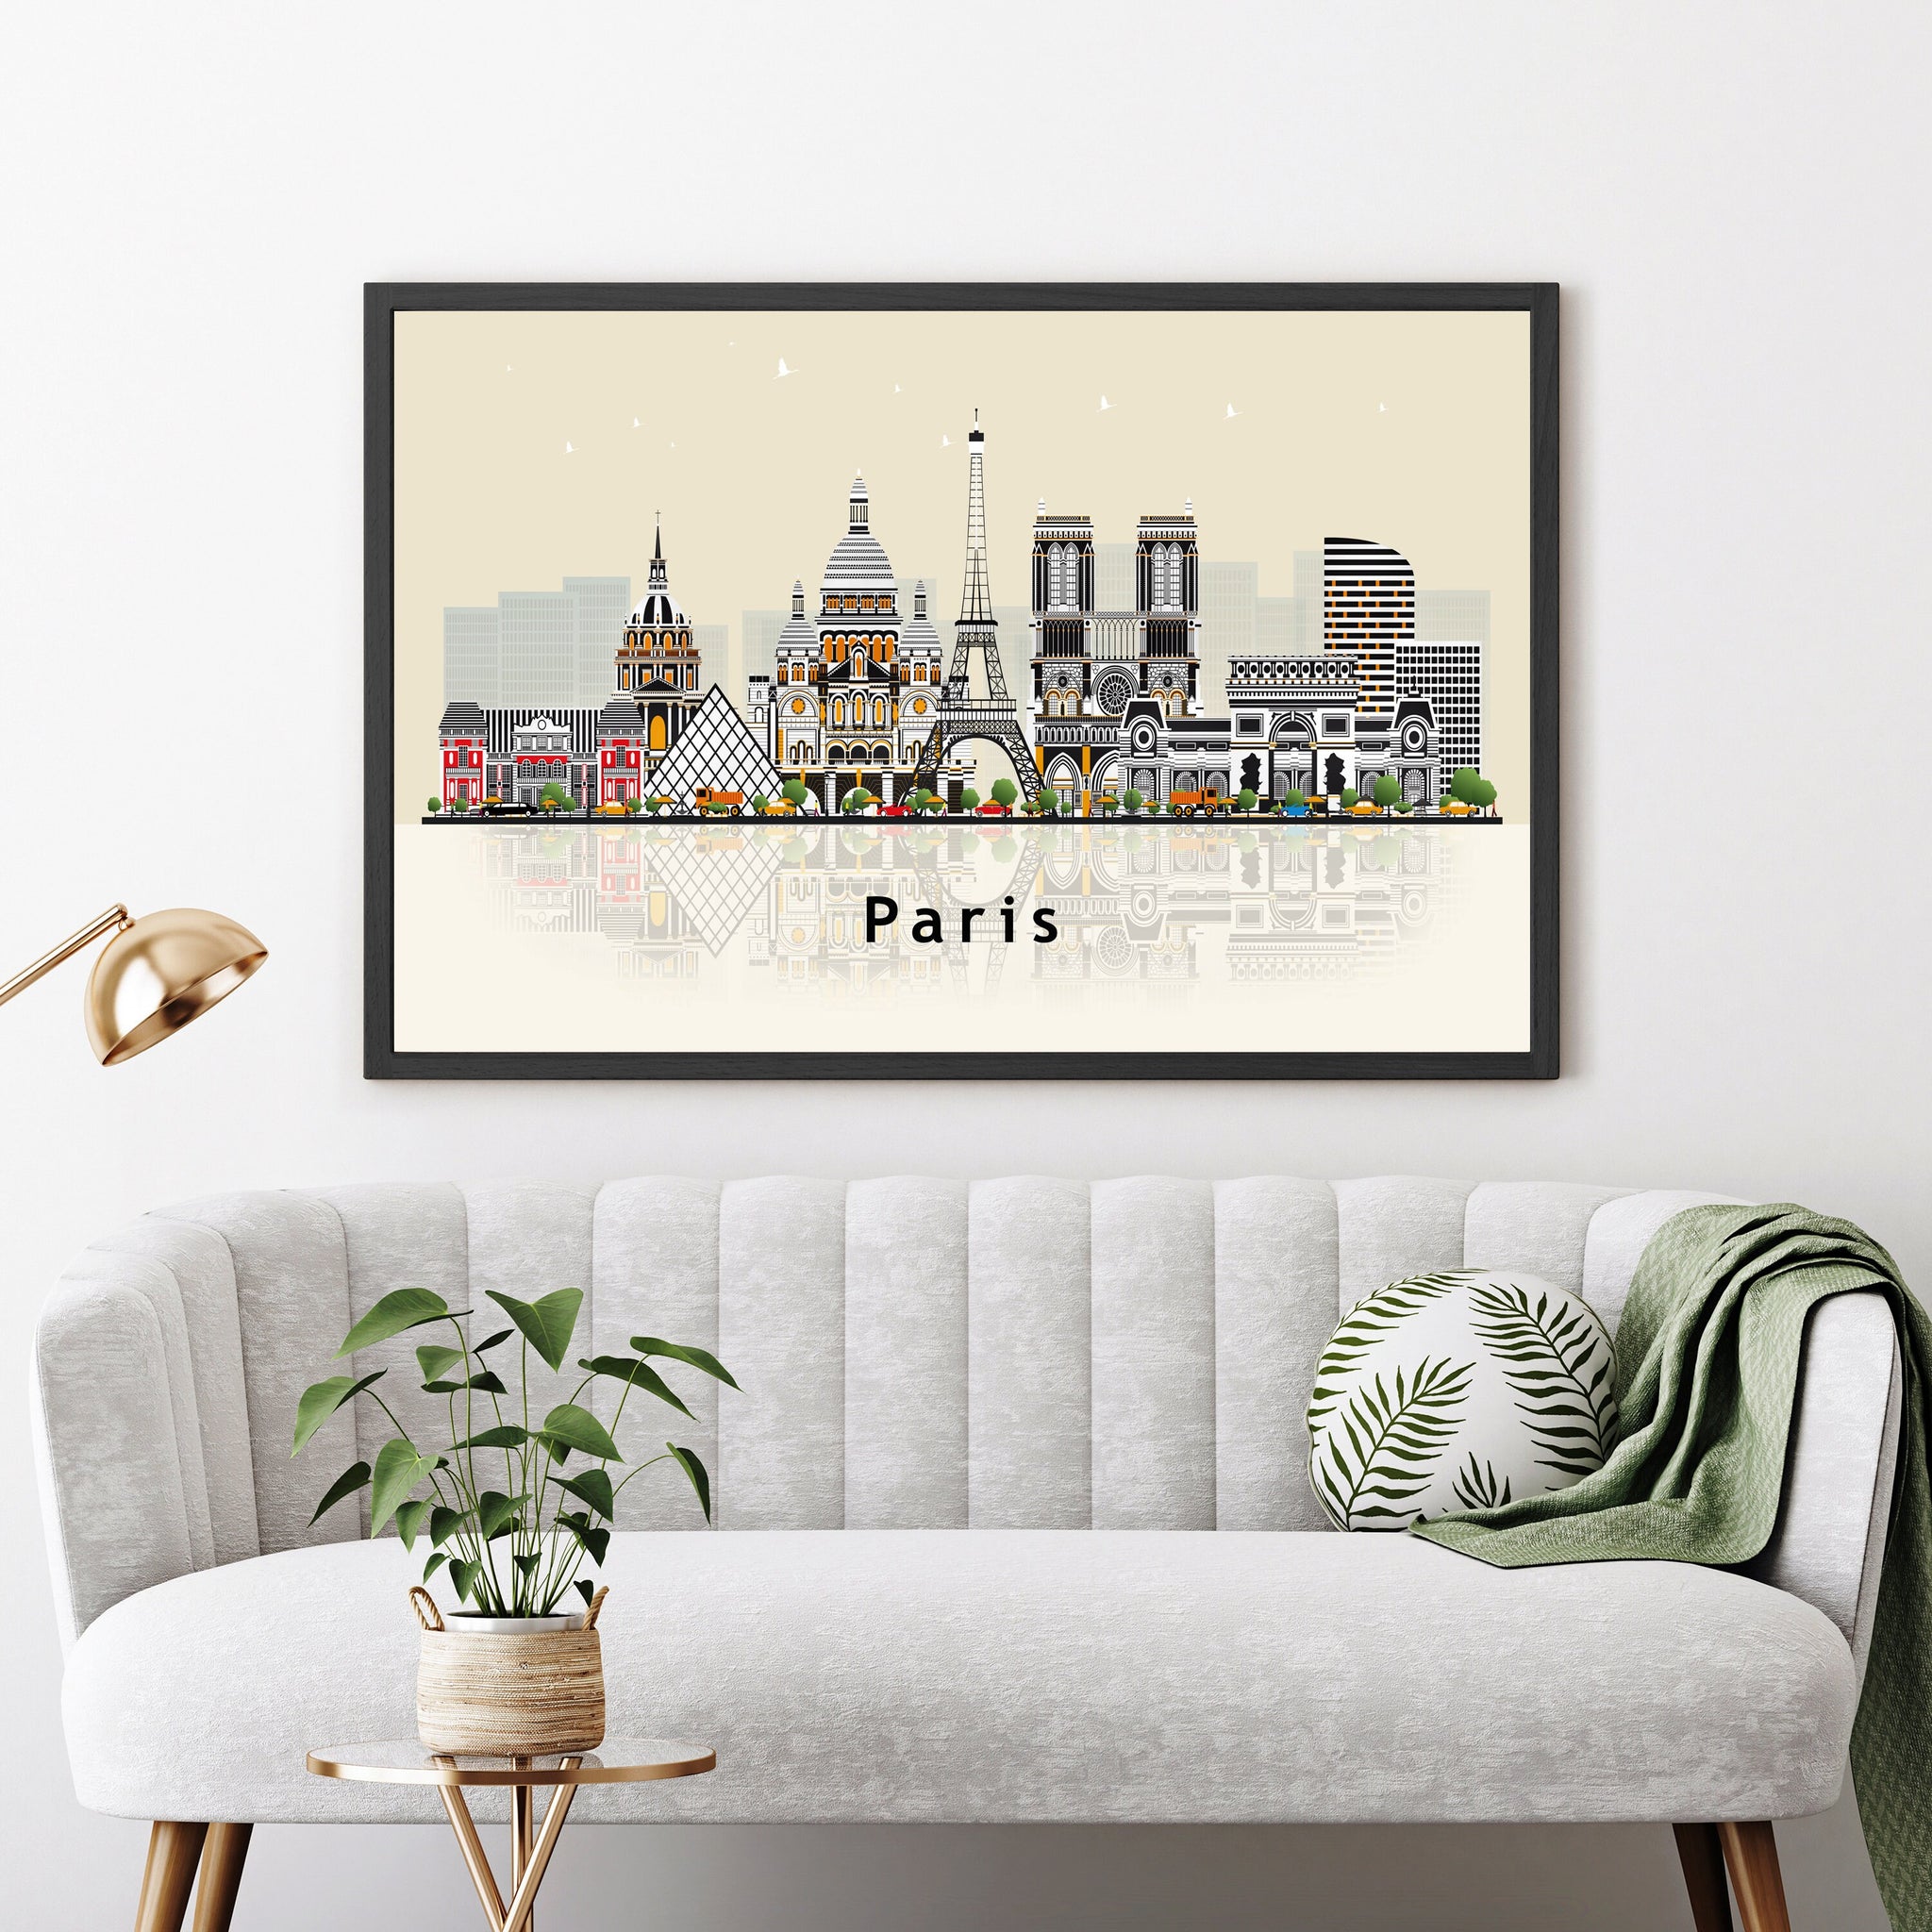 PARIS FRANCE Illustration skyline poster, Modern skyline cityscape poster print, Paris landmark map poster, Home wall art decoration